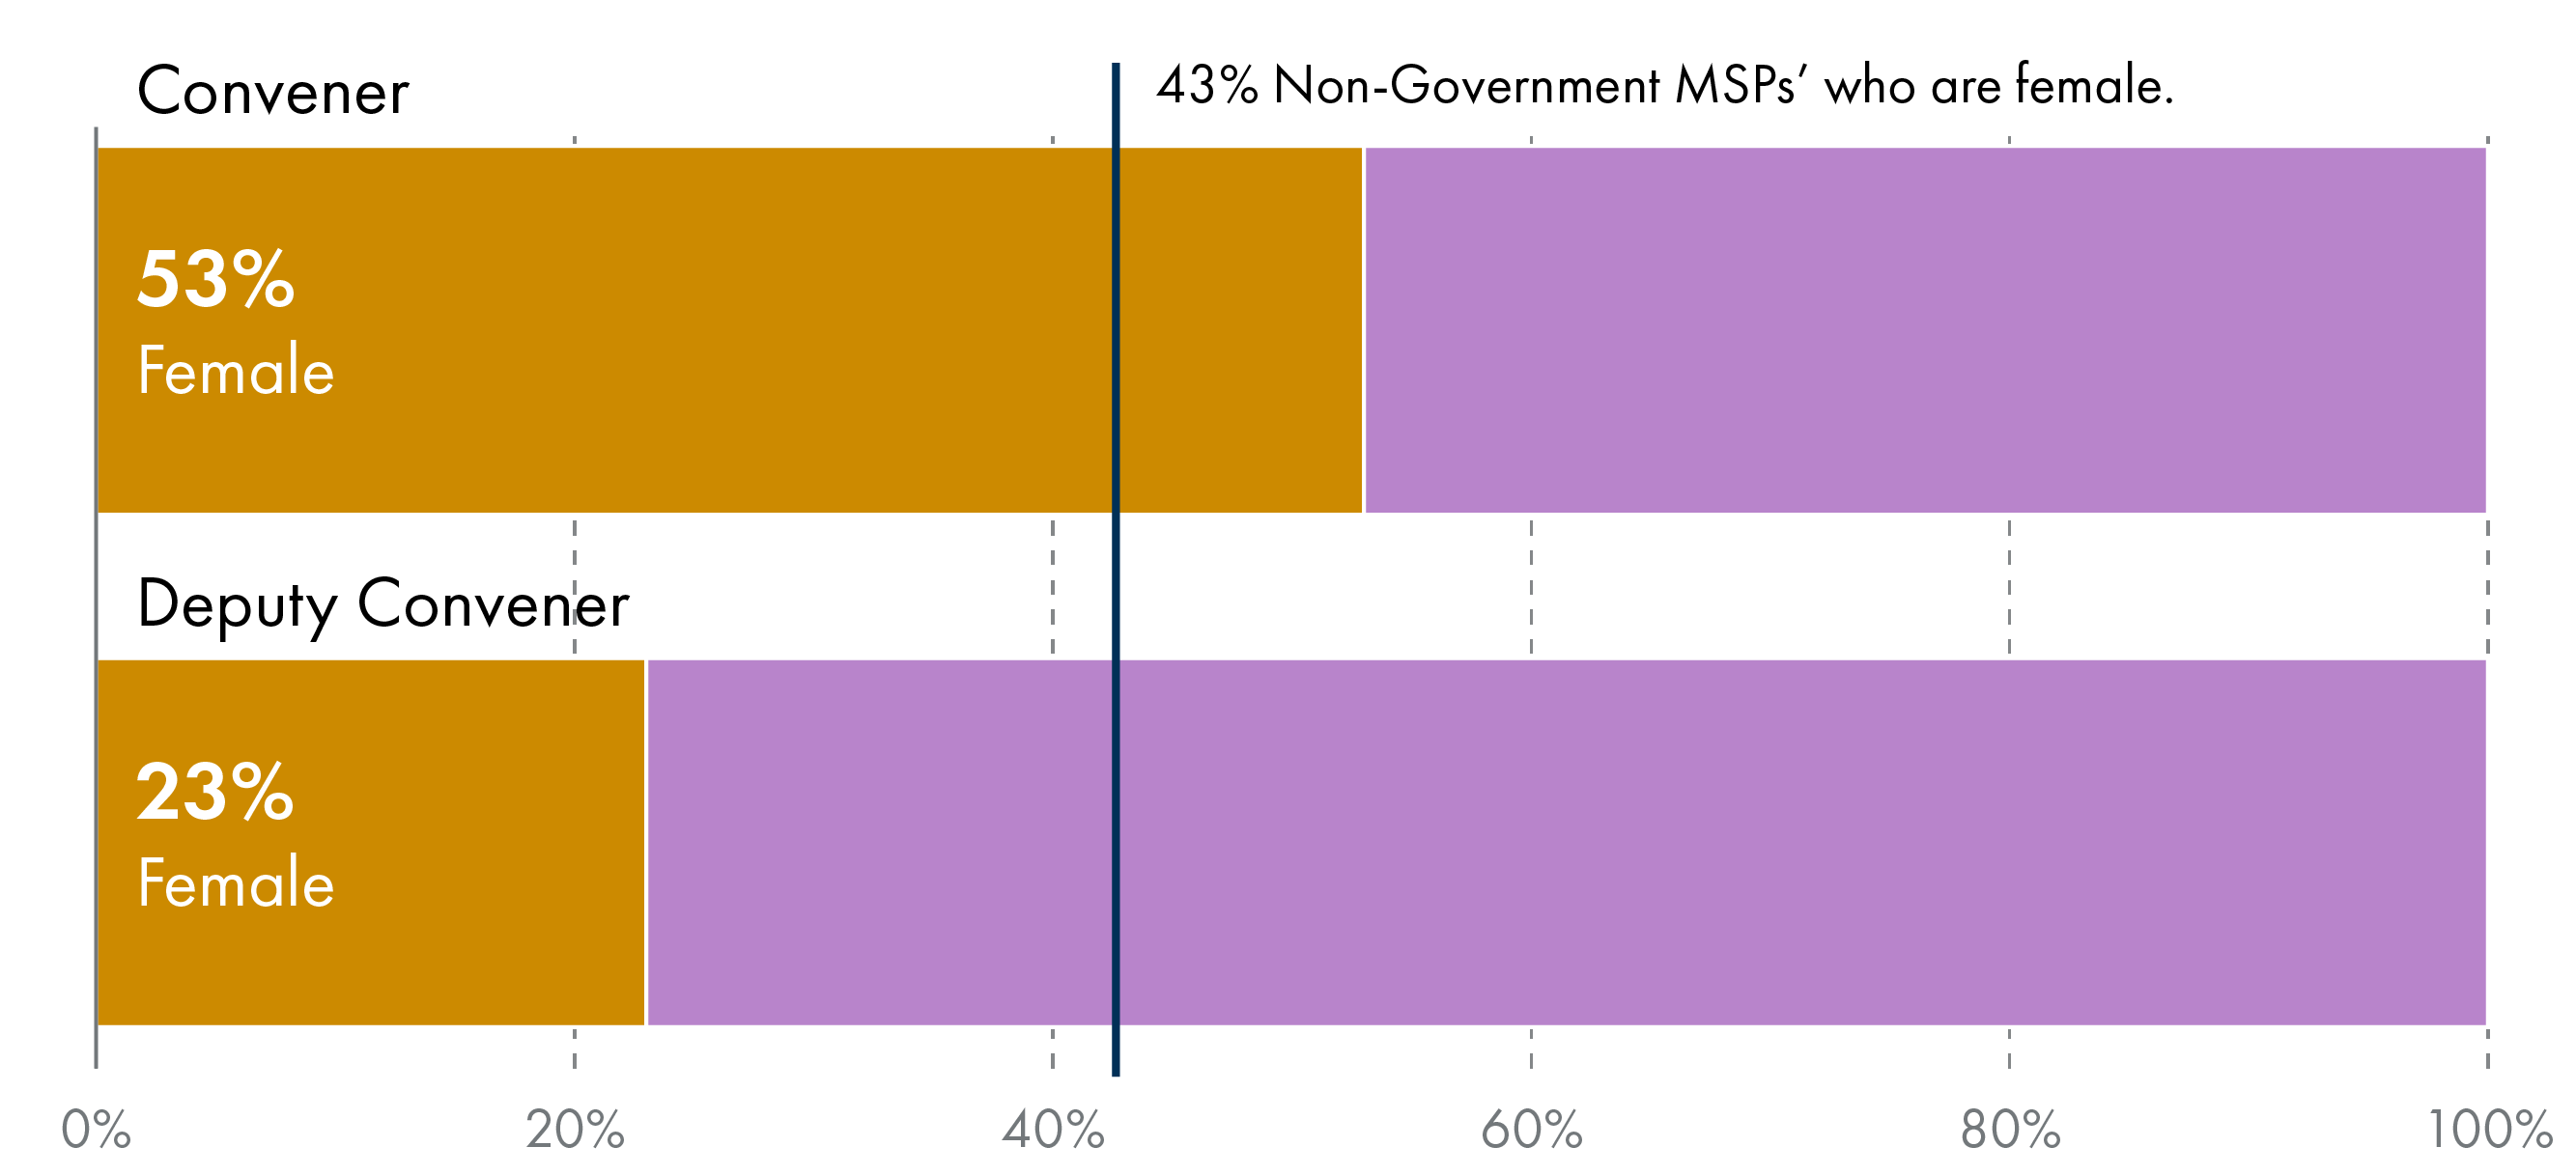 Convener - 53% Female, Deputy Convener - 23% Female